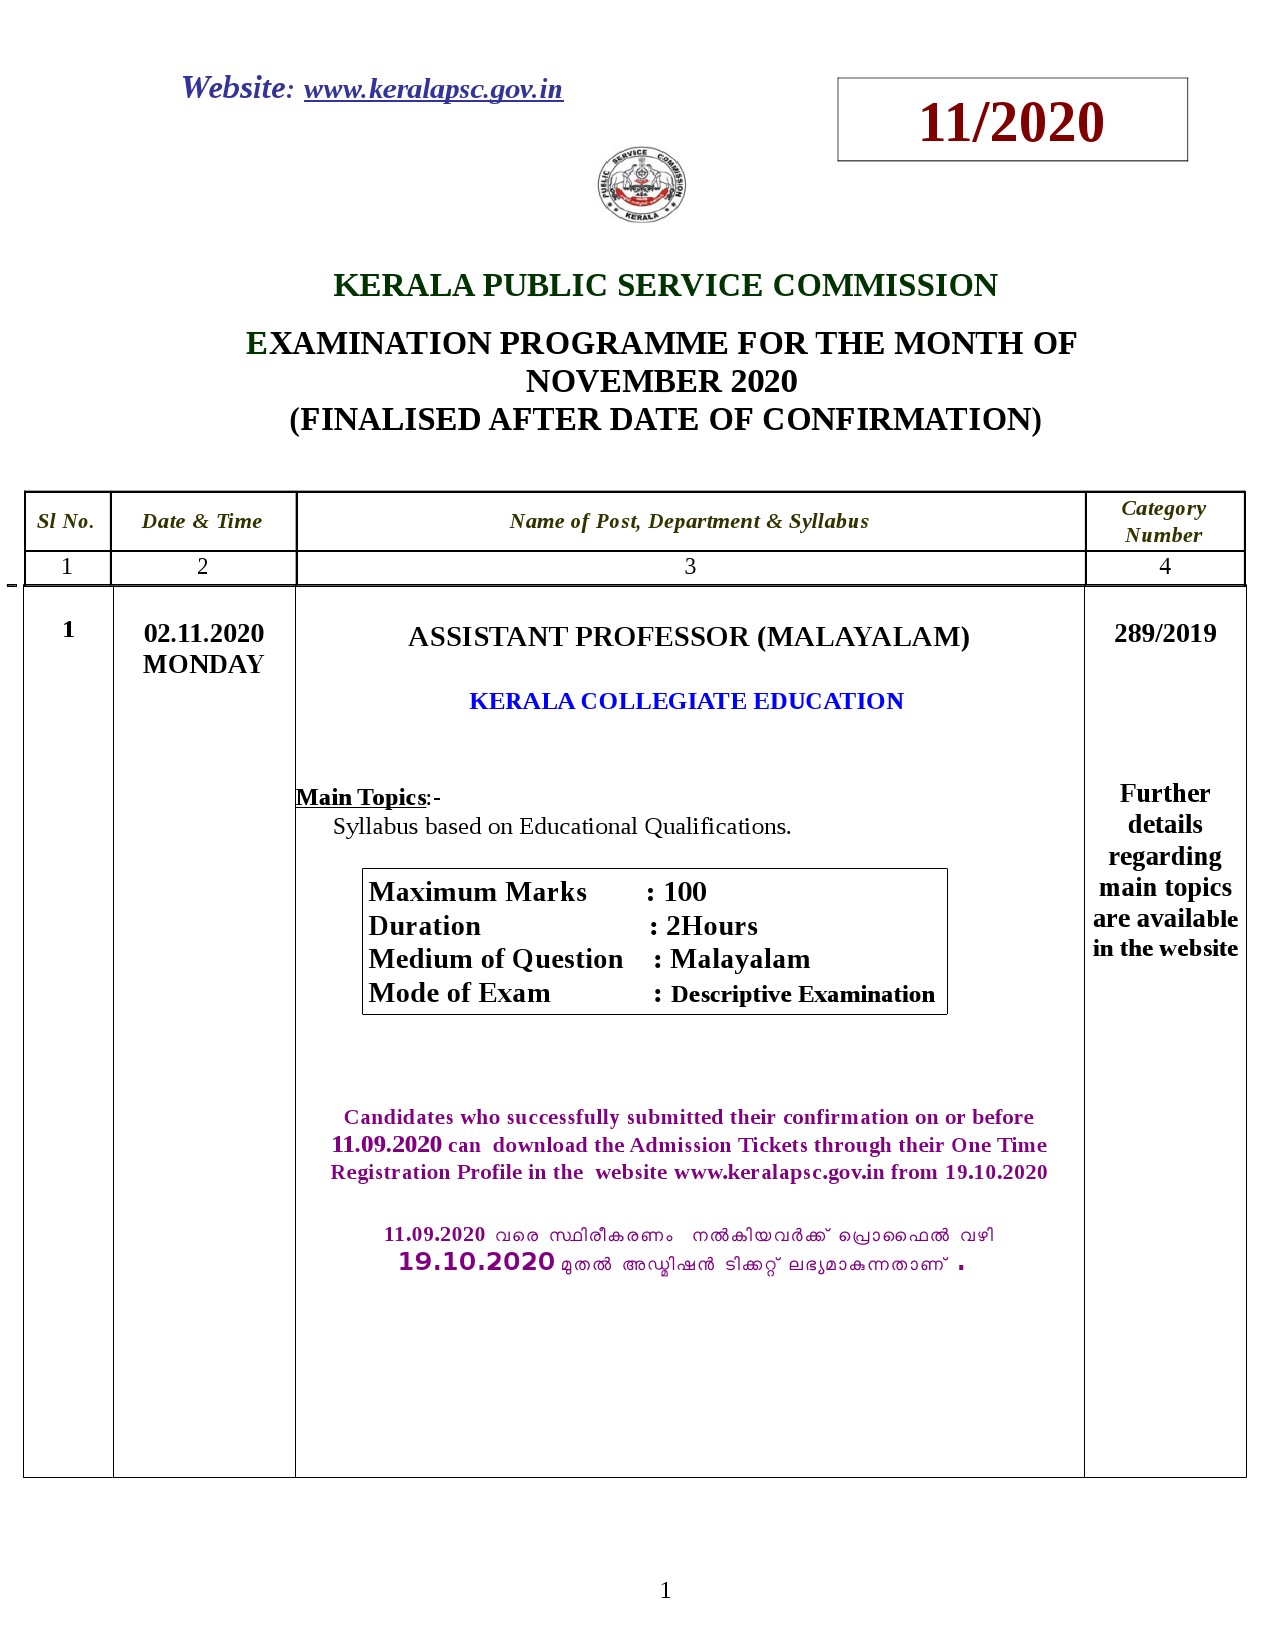 Kerala PSC Final Exam Schedule for November 2020 - Notification Image 1